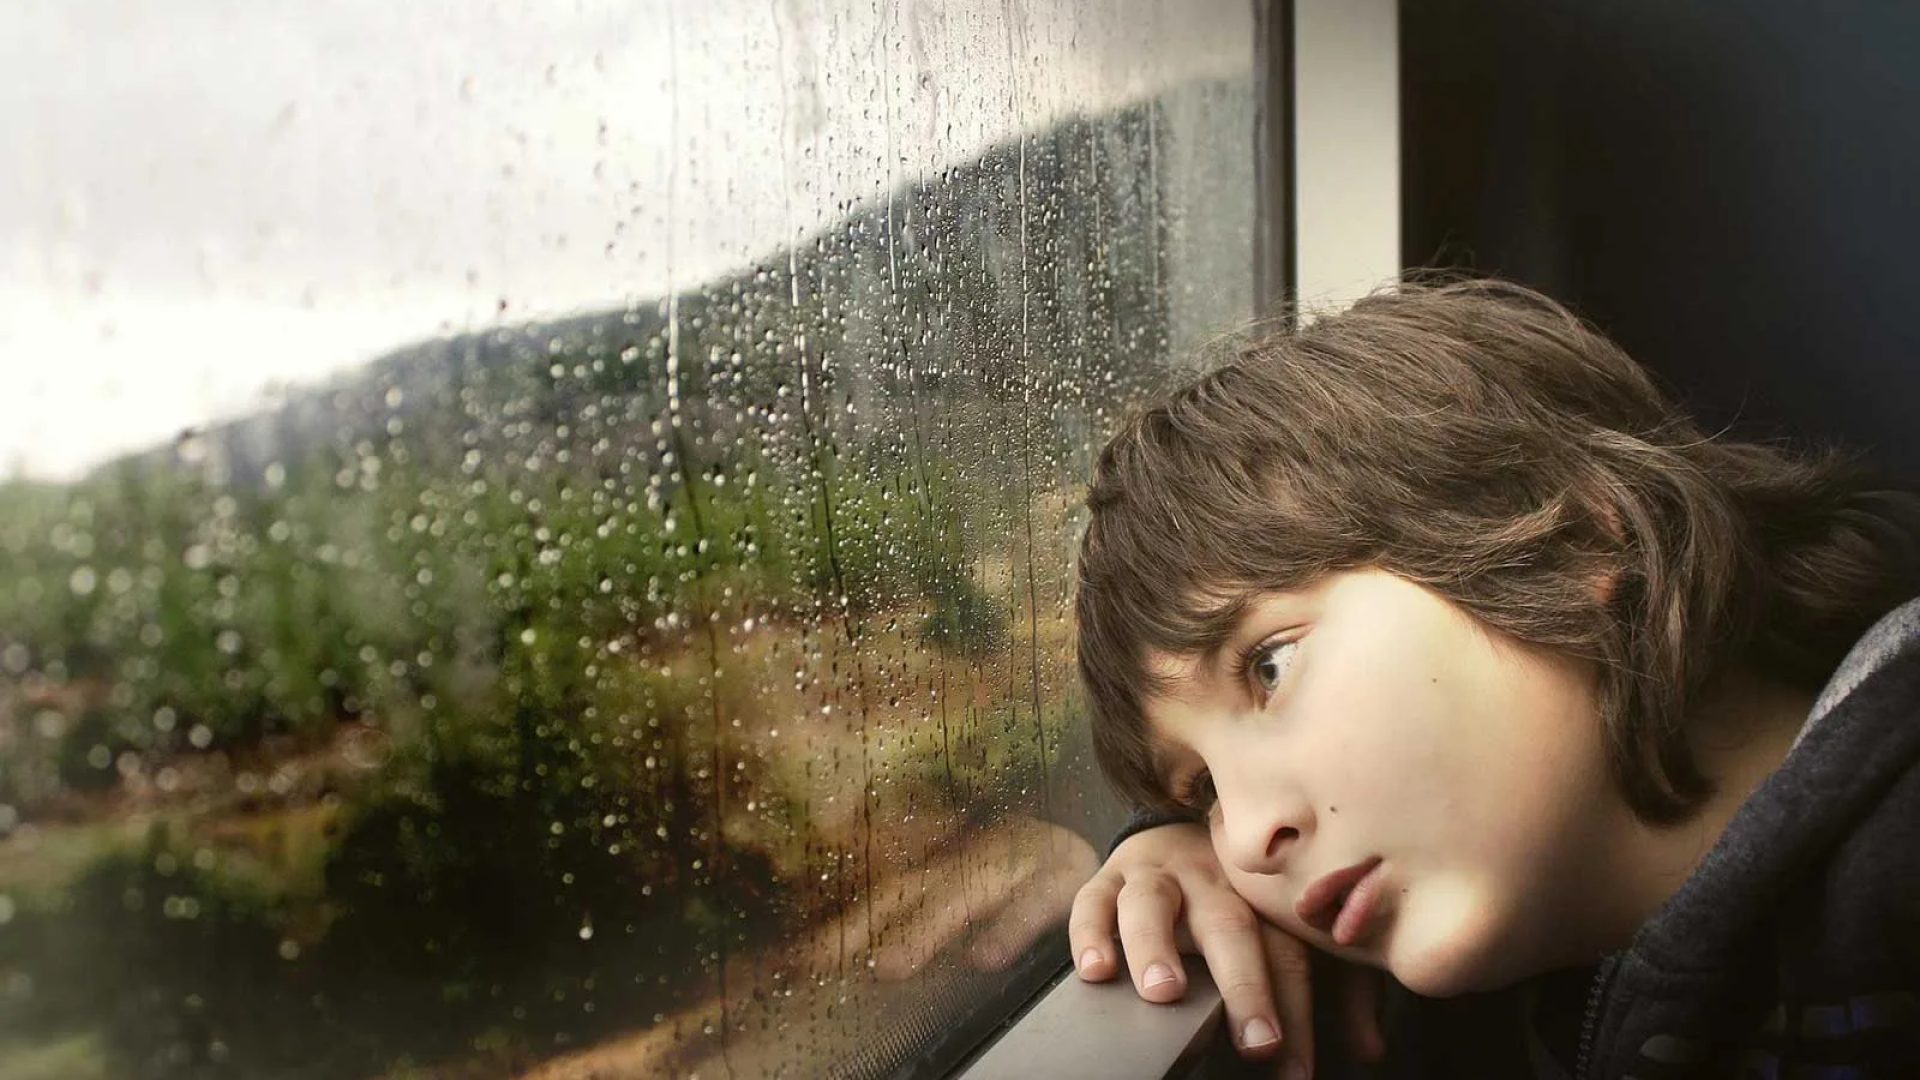 A child looks out through the rain-strewn window of the train in Haute-Loire